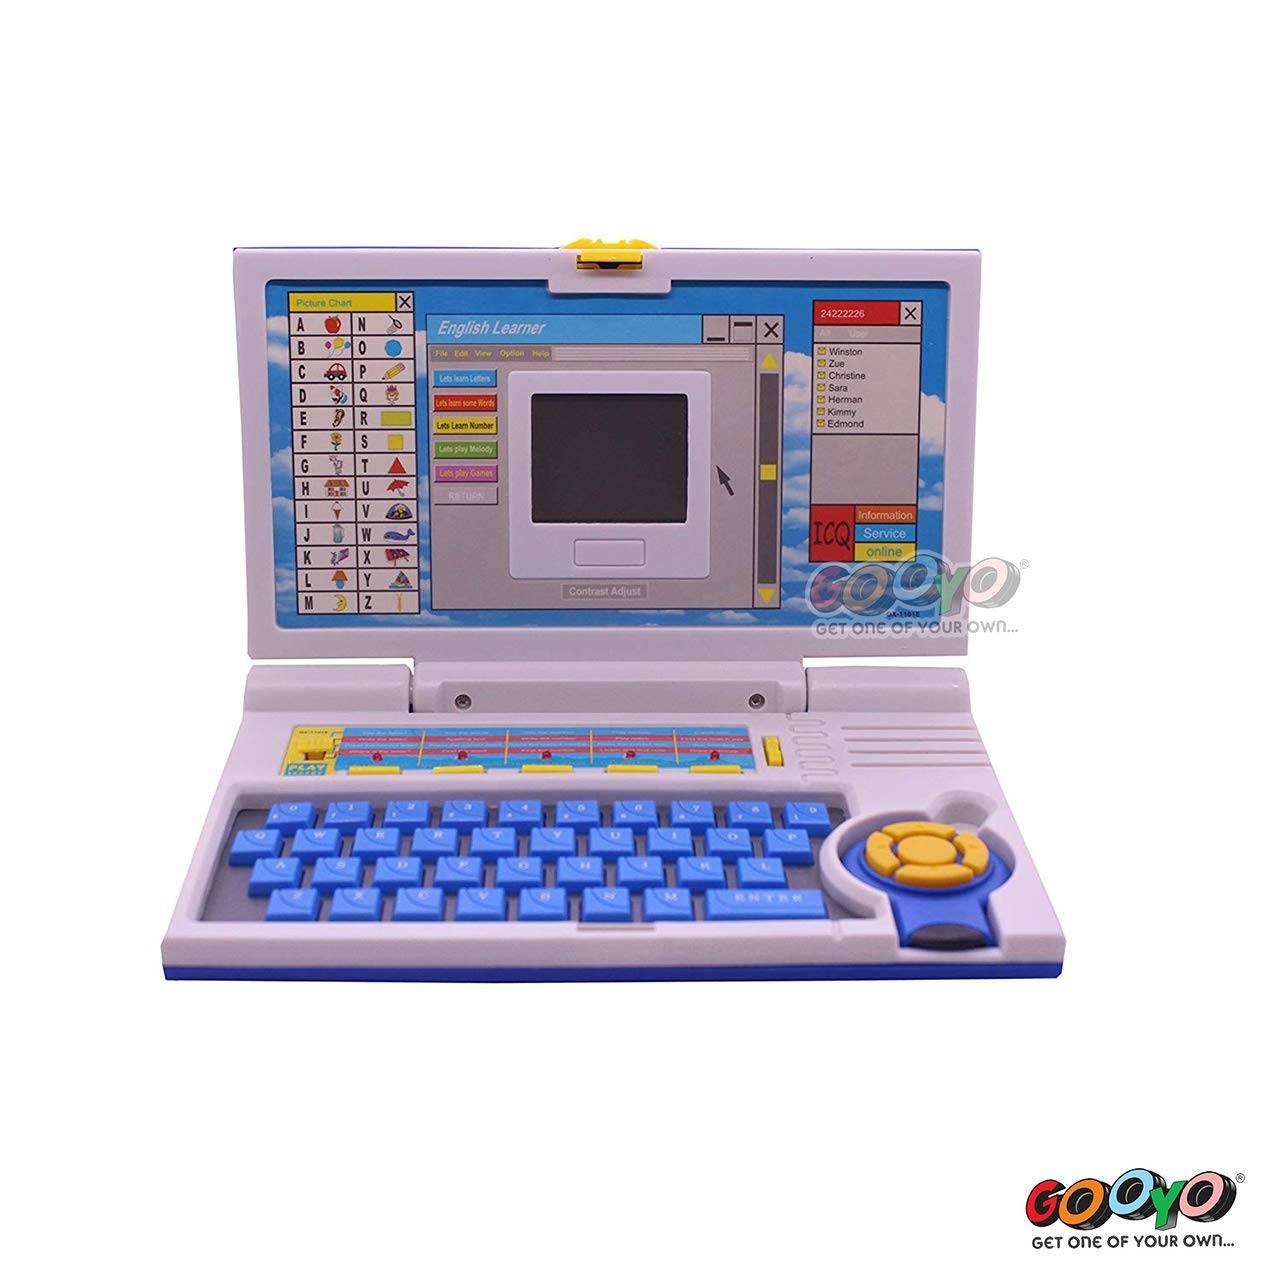 Buy Gooyo English Learner Educational Laptop Toy